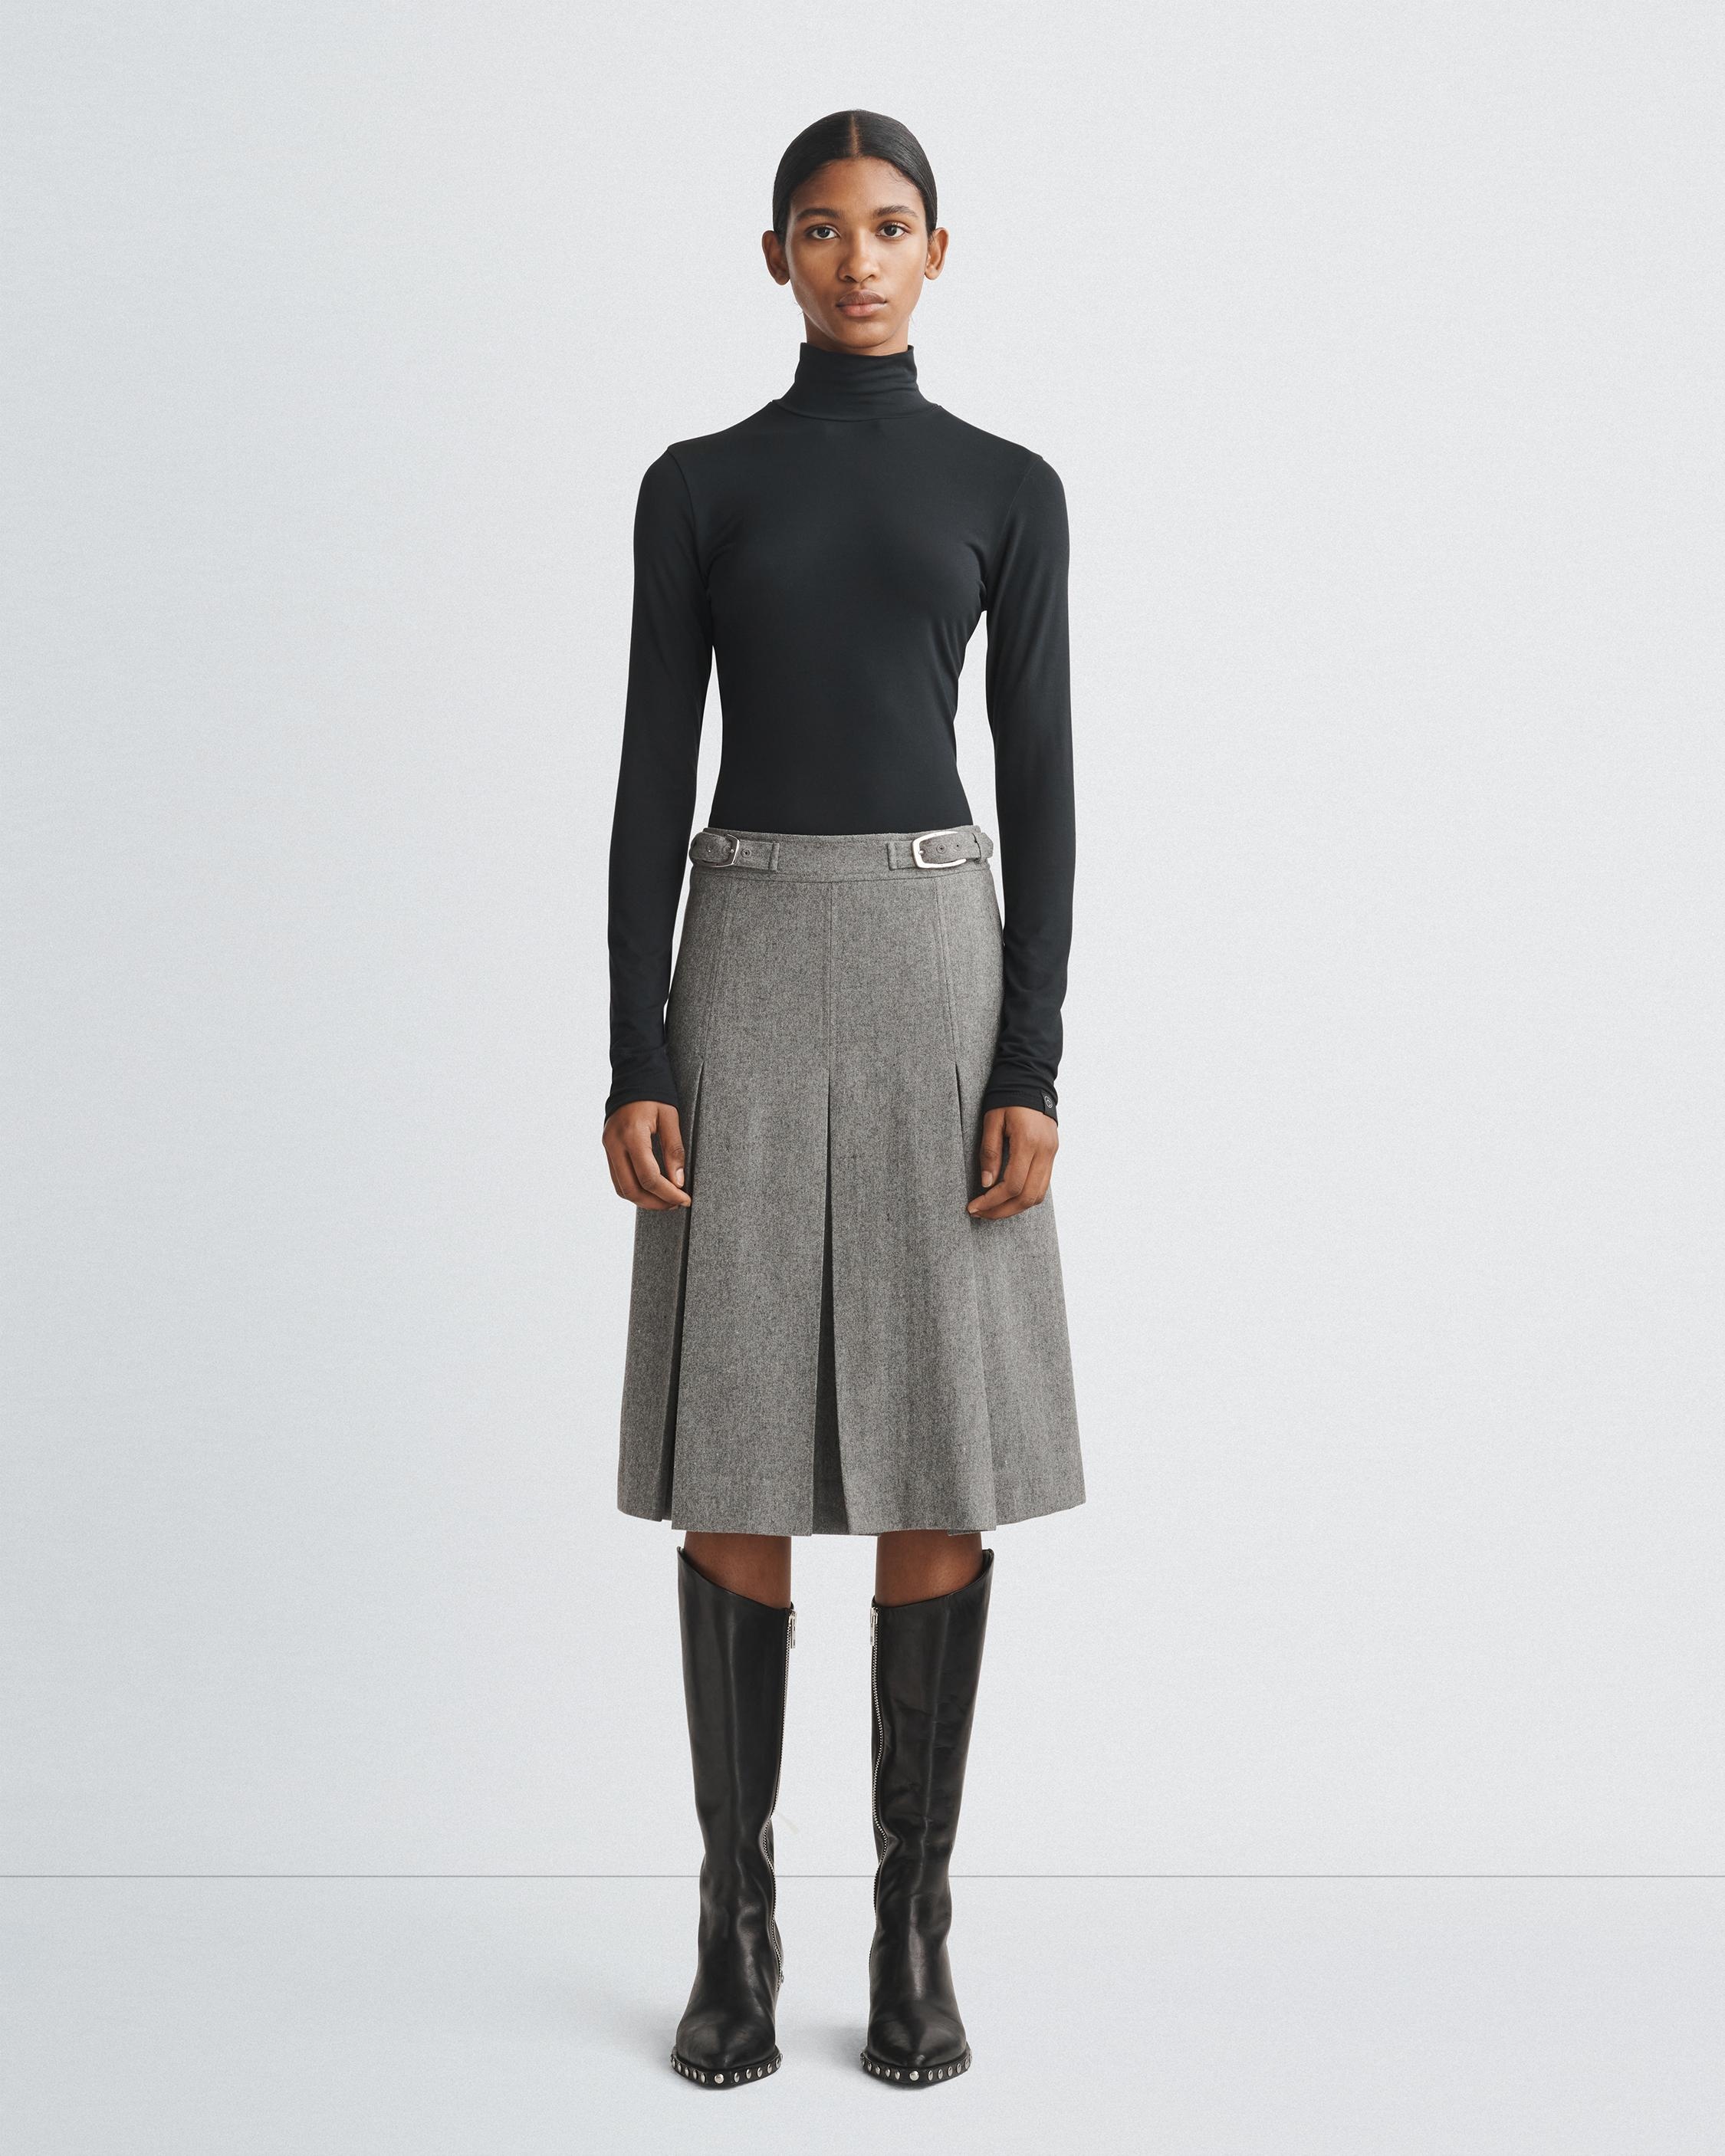 Garnet Italian Wool Skirt
Midi - 1